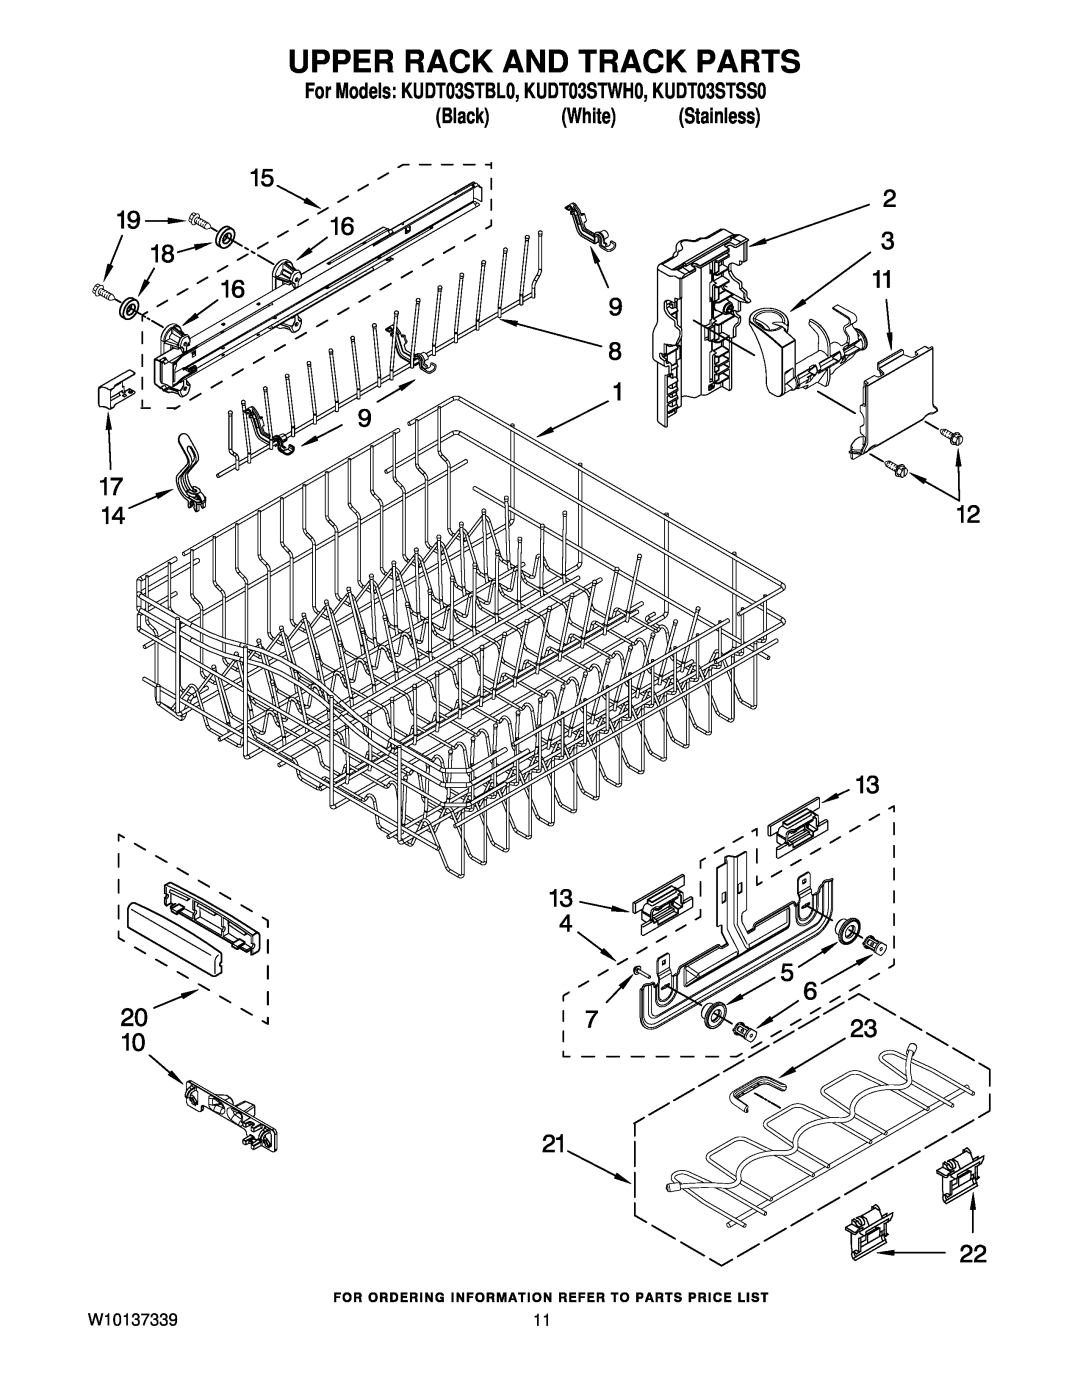 KitchenAid manual Upper Rack And Track Parts, For Models KUDT03STBL0, KUDT03STWH0, KUDT03STSS0, Black White Stainless 